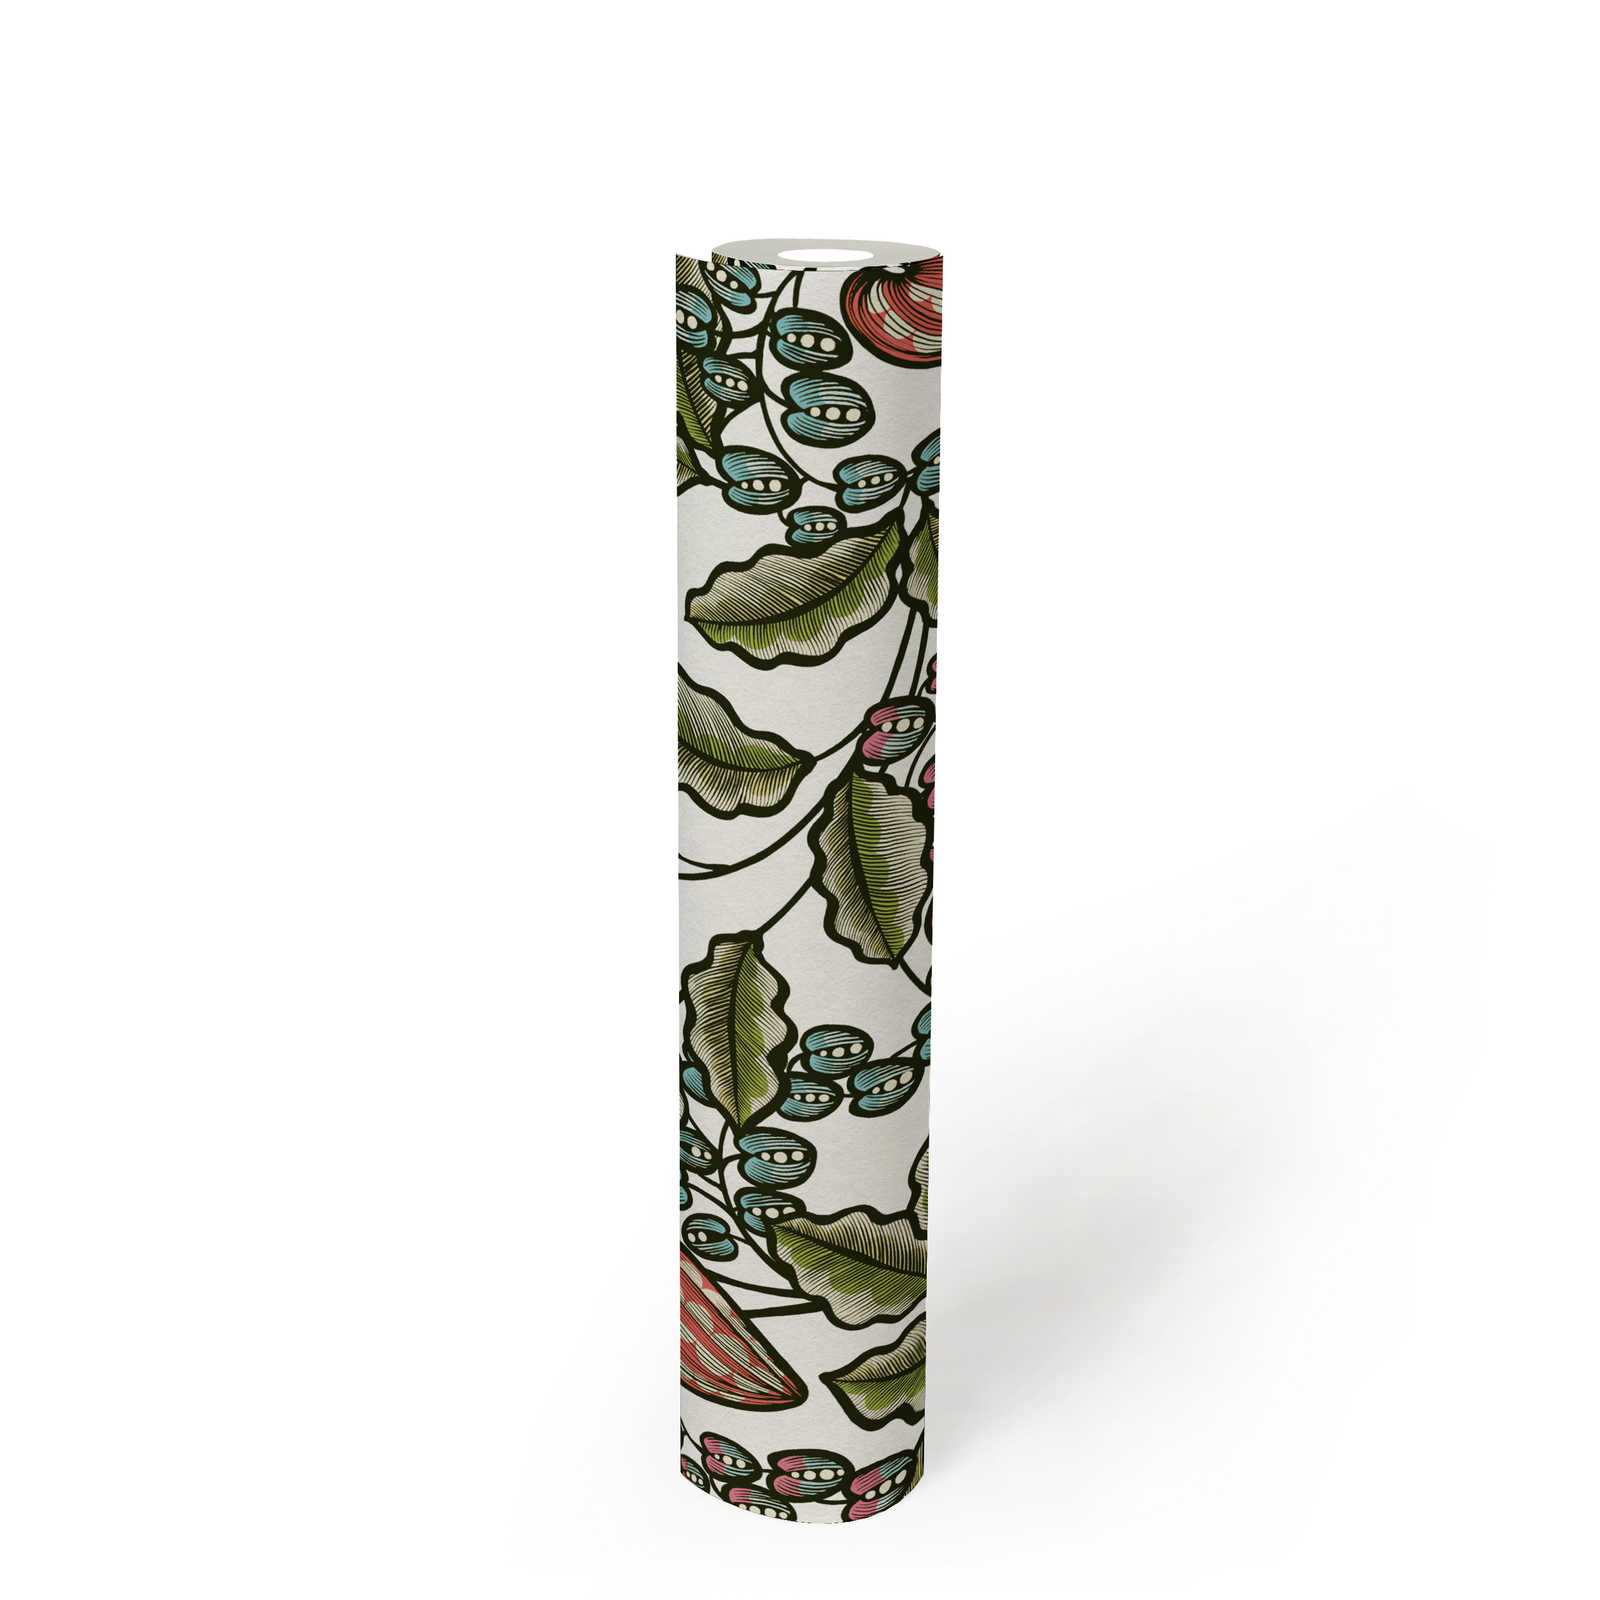             Florale Tapete Natur Design Scandinavian Print – Bunt, Grün, Weiß
        